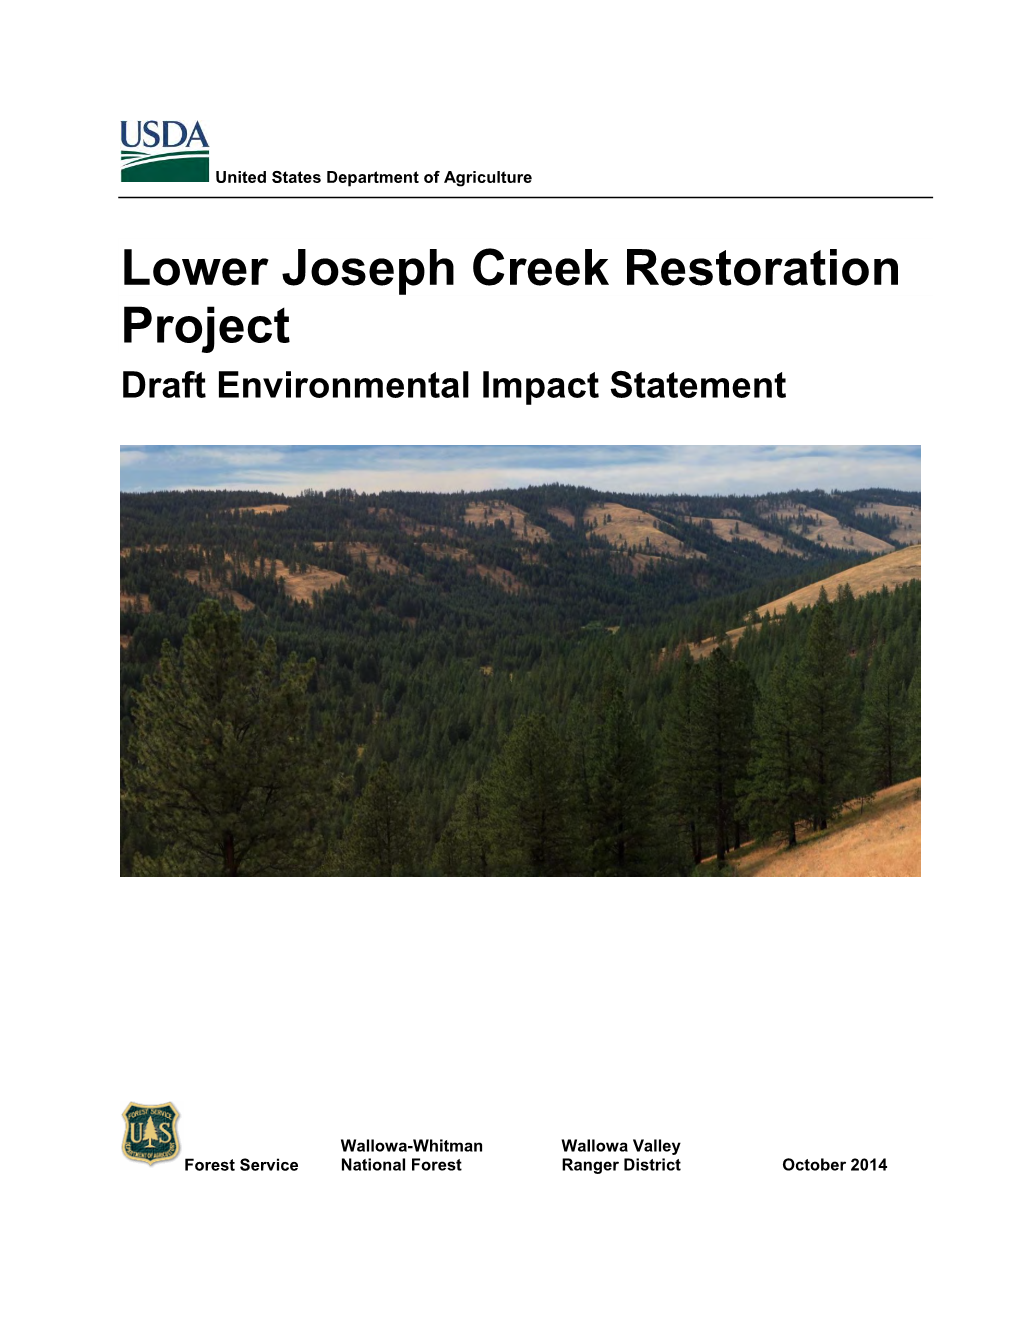 Lower Joseph Creek Restoration Project Draft Environmental Impact Statement